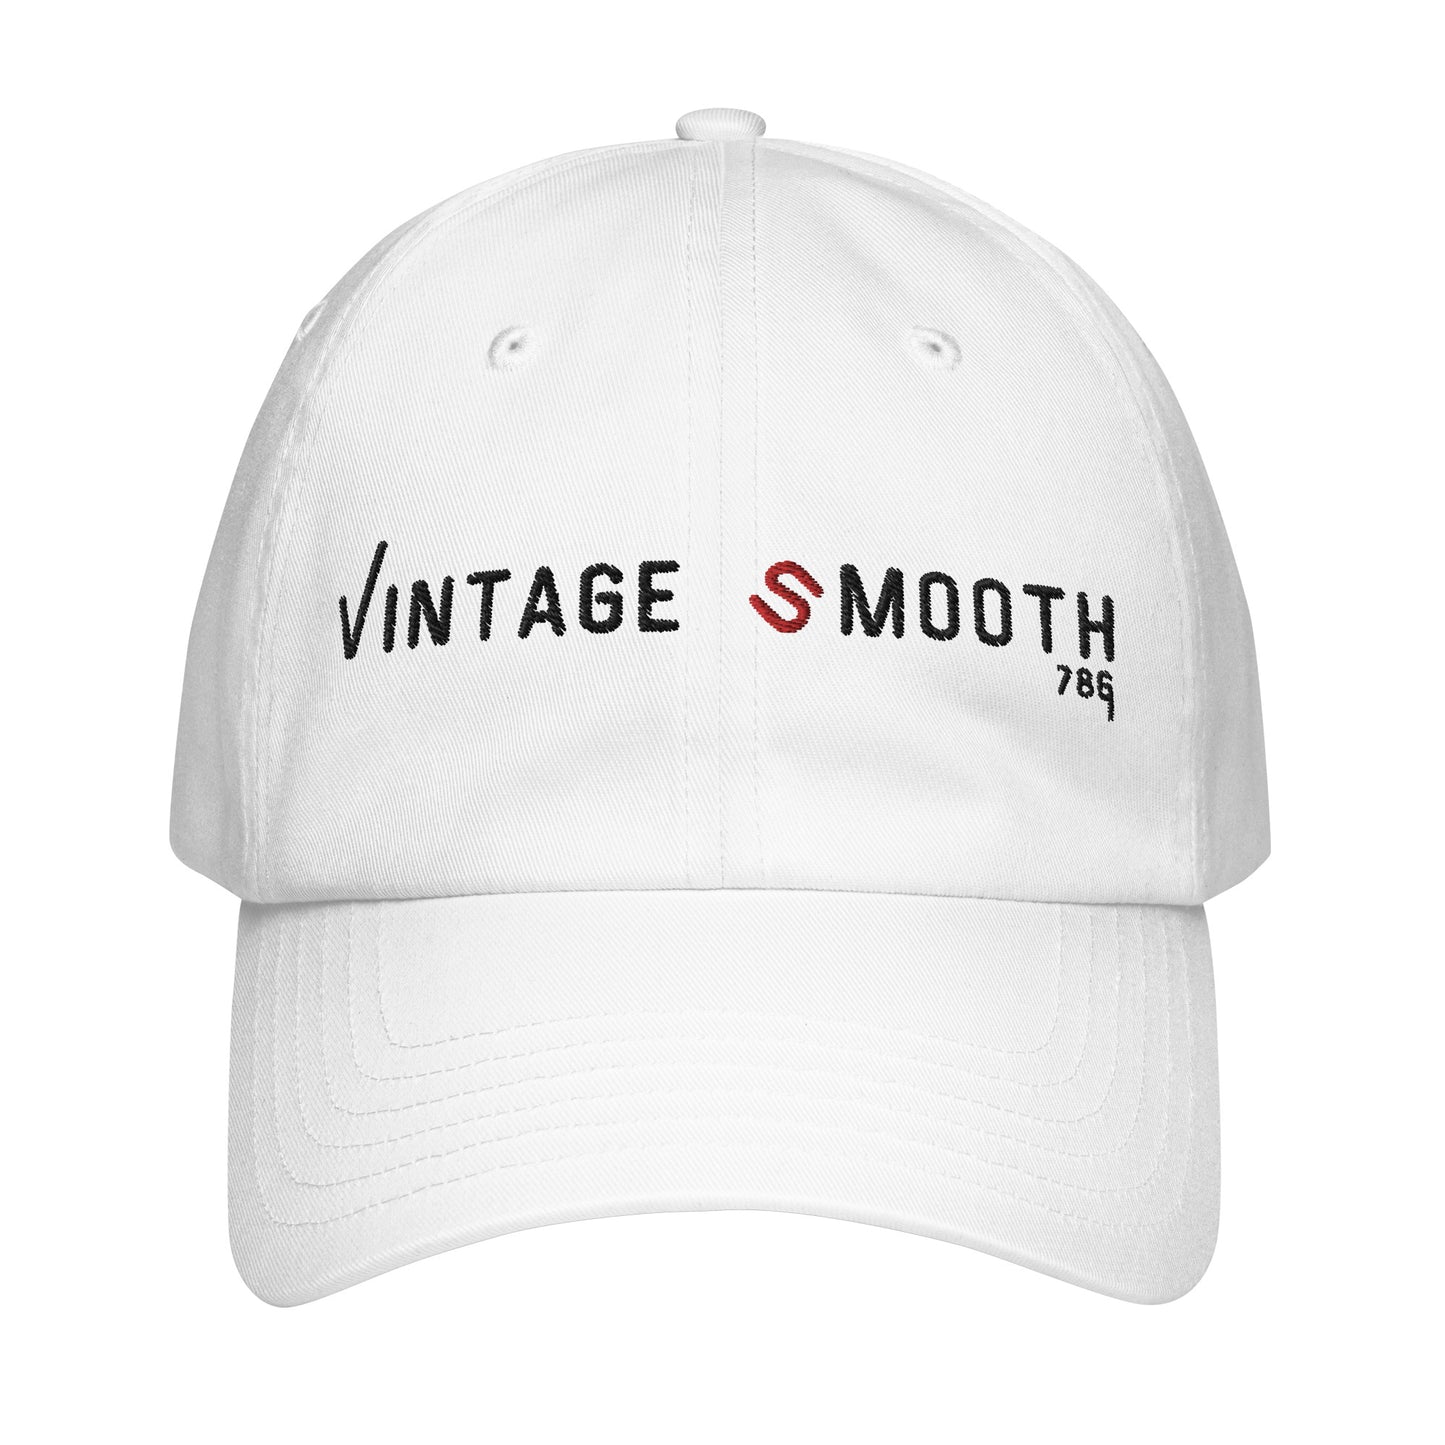 Vintage Smooth Baseball Cap de 78G Lifestyle - Vista frontal